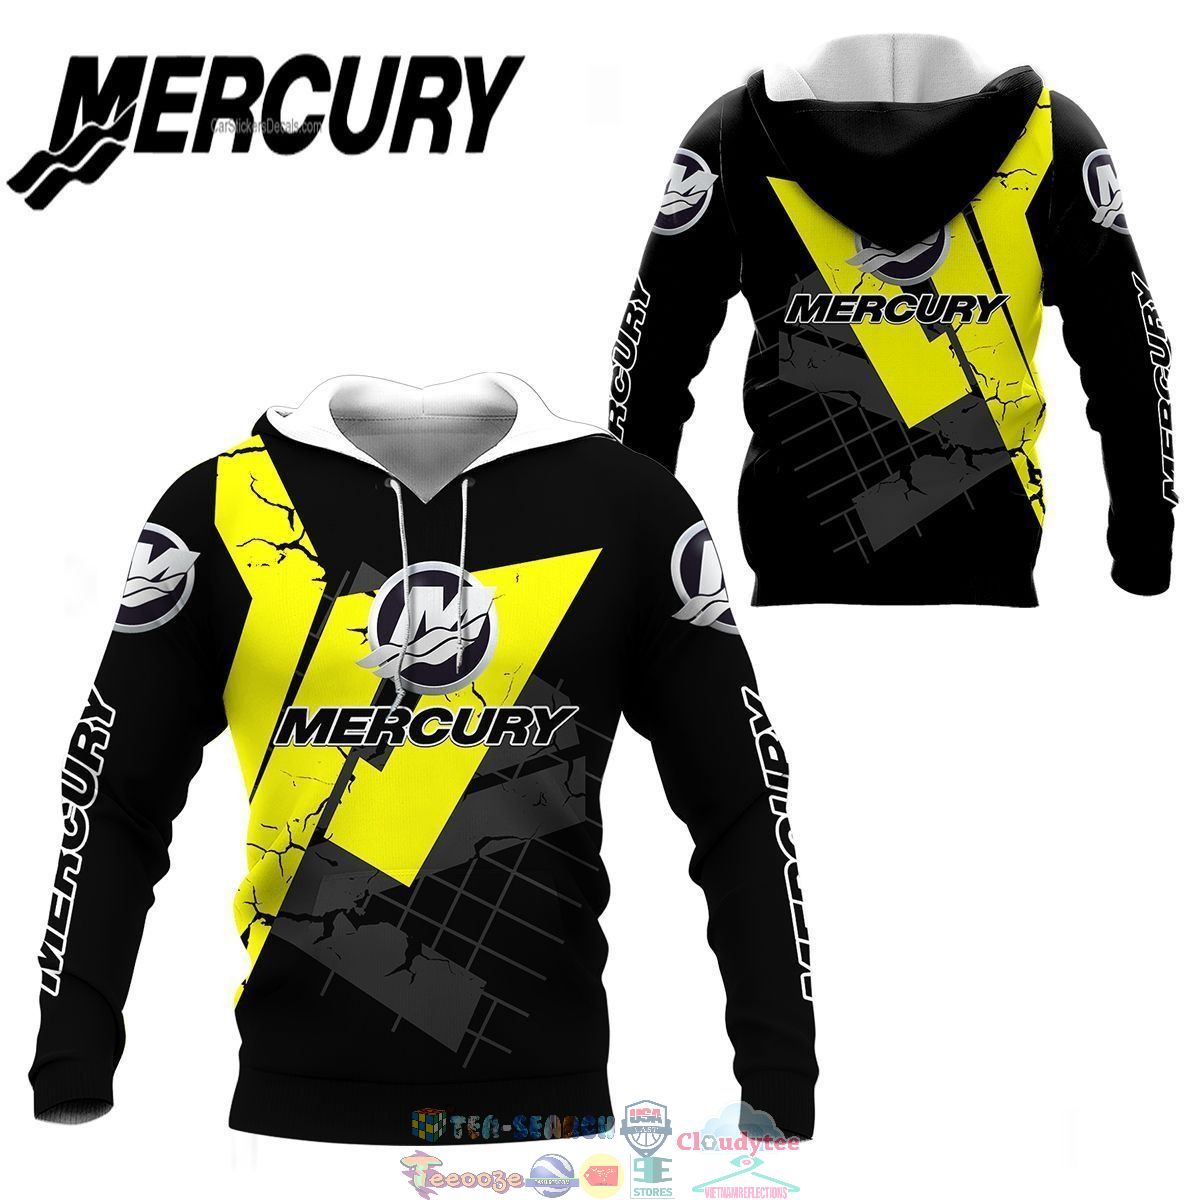 Mercury ver 6 3D hoodie and t-shirt